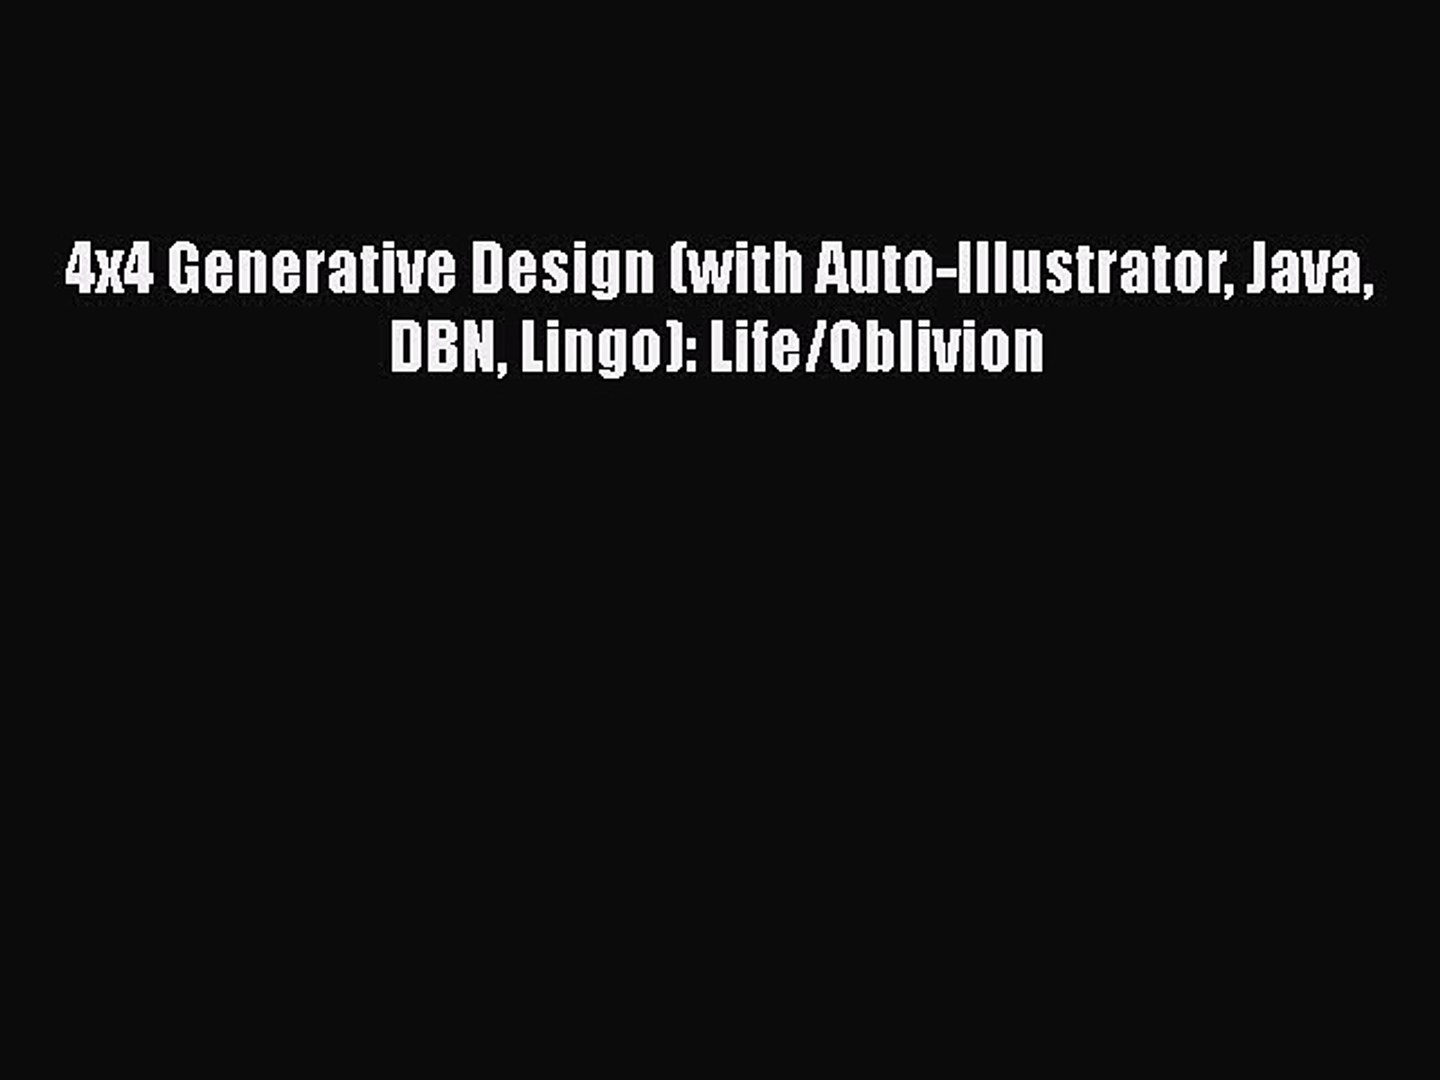 [PDF Download] 4x4 Generative Design (with Auto-Illustrator Java DBN Lingo): Life/Oblivion